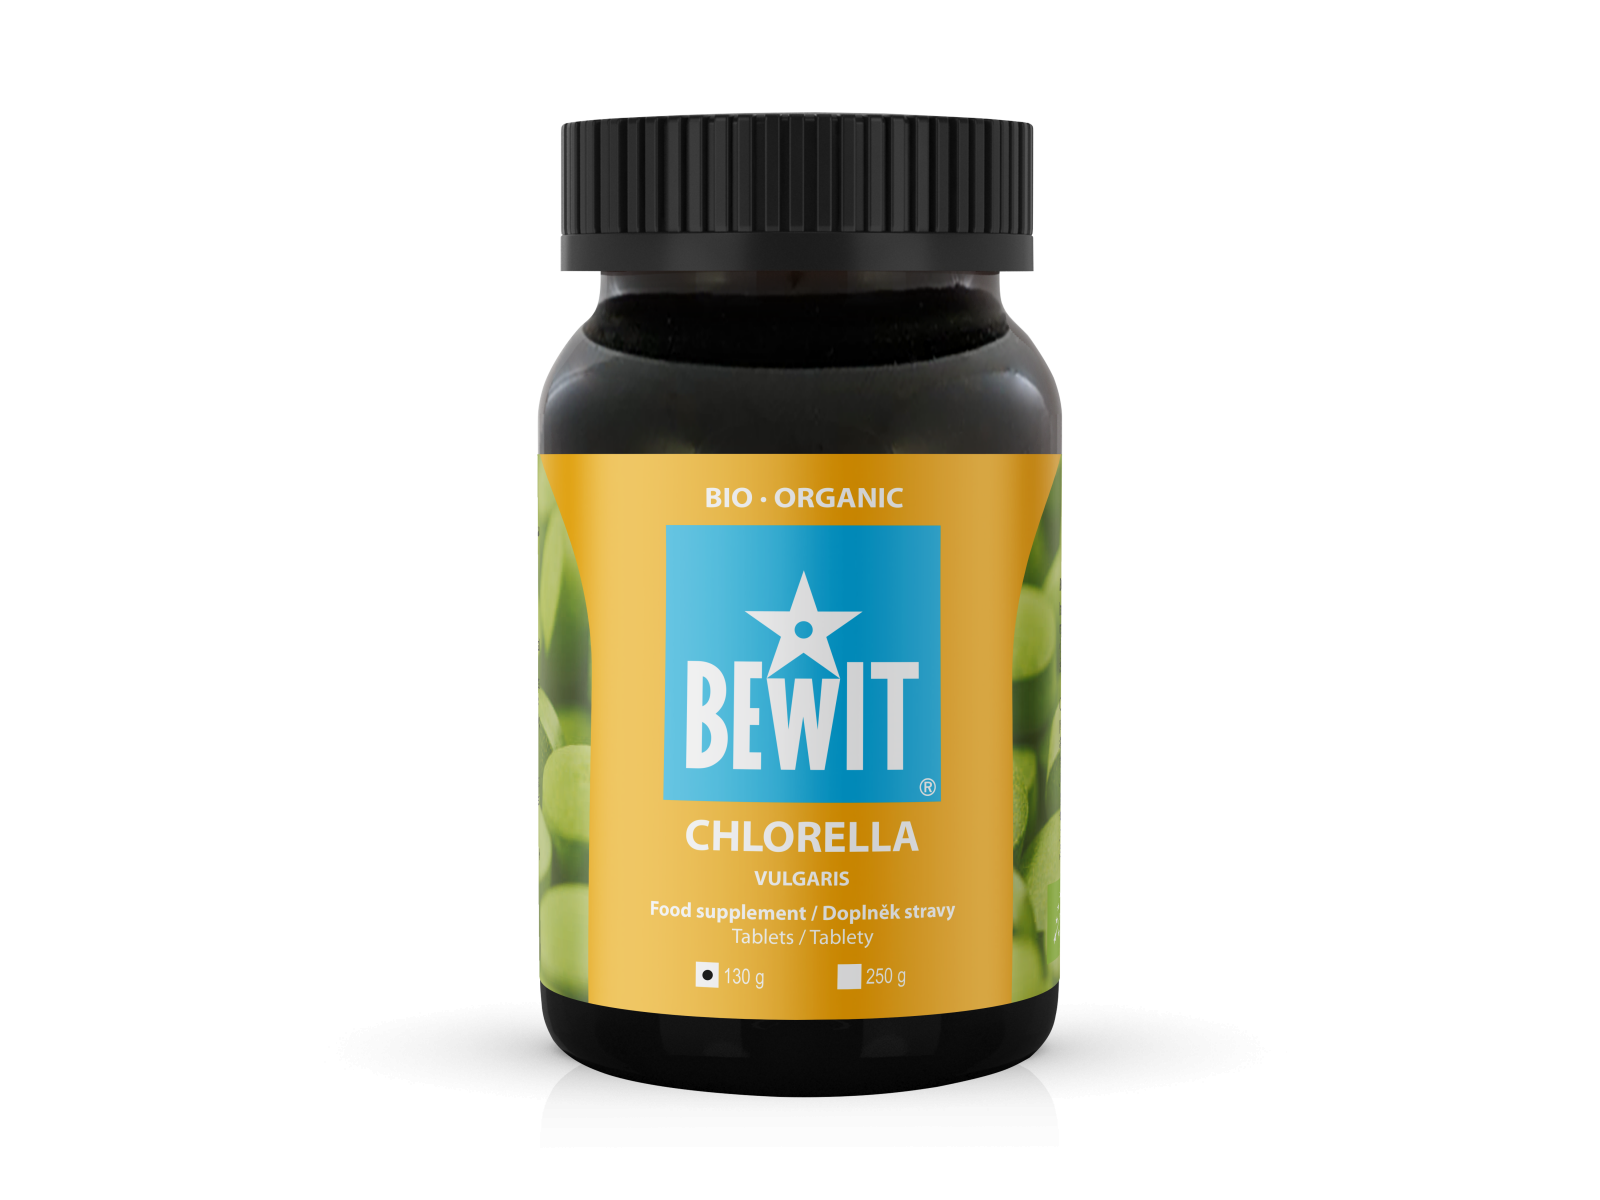 BEWIT Chlorella vulgaris ORGANIC, tablets - Food supplement - 2